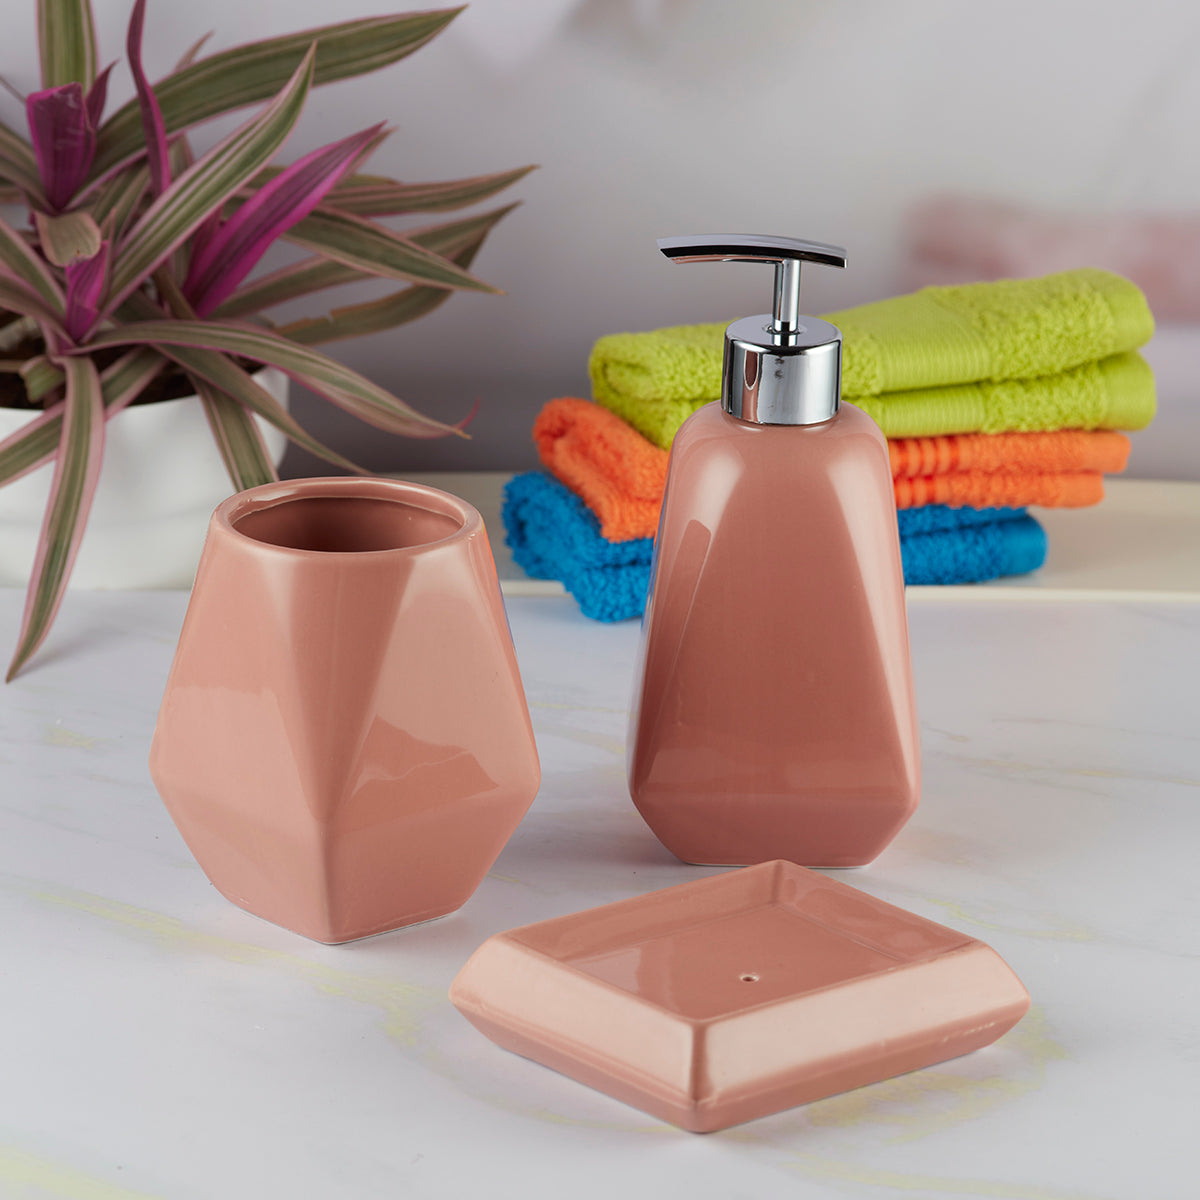 Ceramic Bathroom Accessories Set of 3 Bath Set with Soap Dispenser (8125)